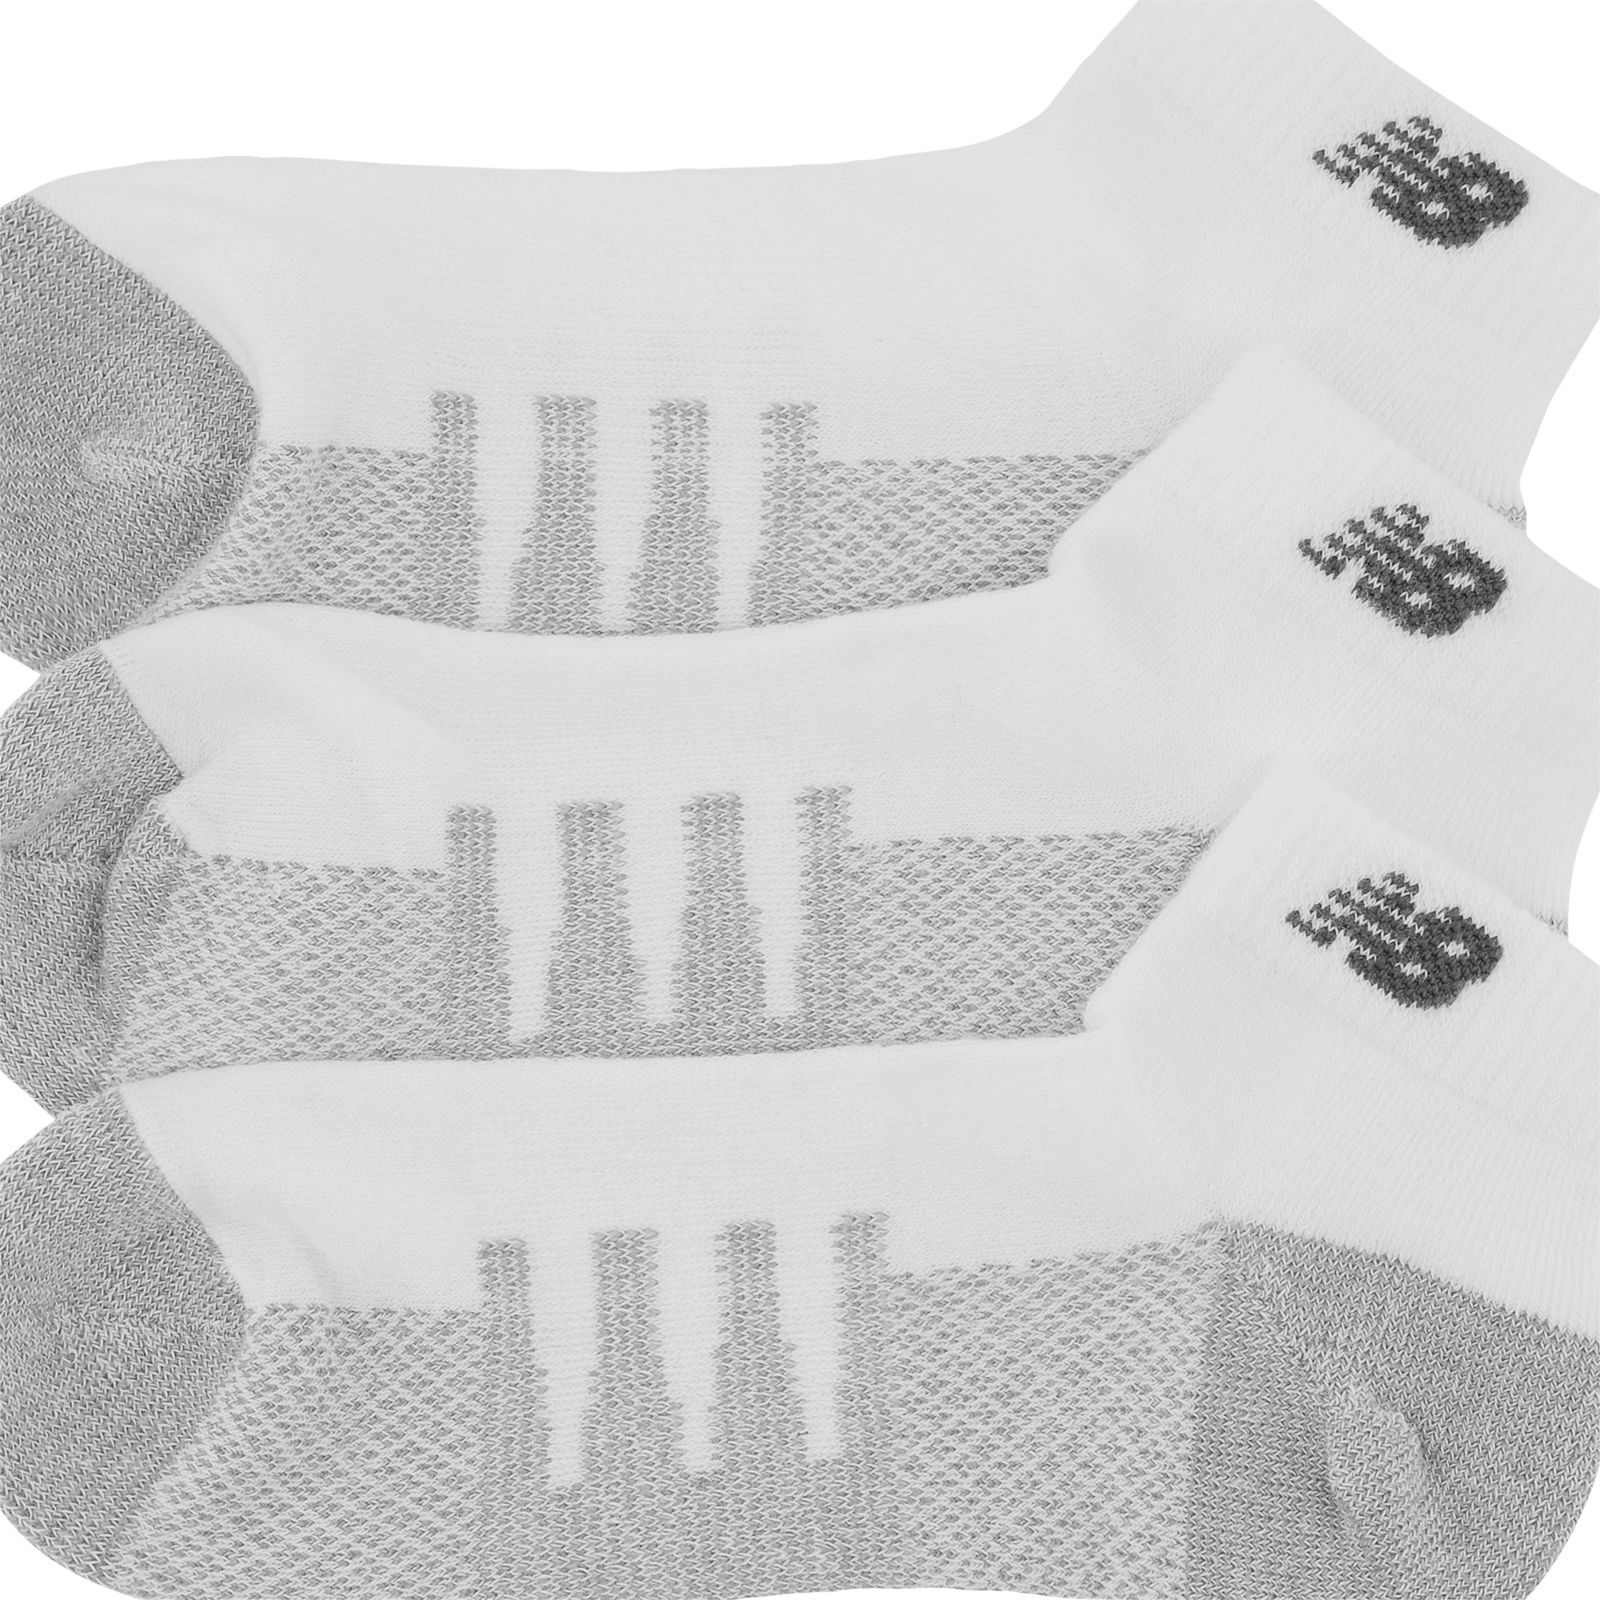 Coolmax Low Cut Socks 2 Pack - New Balance